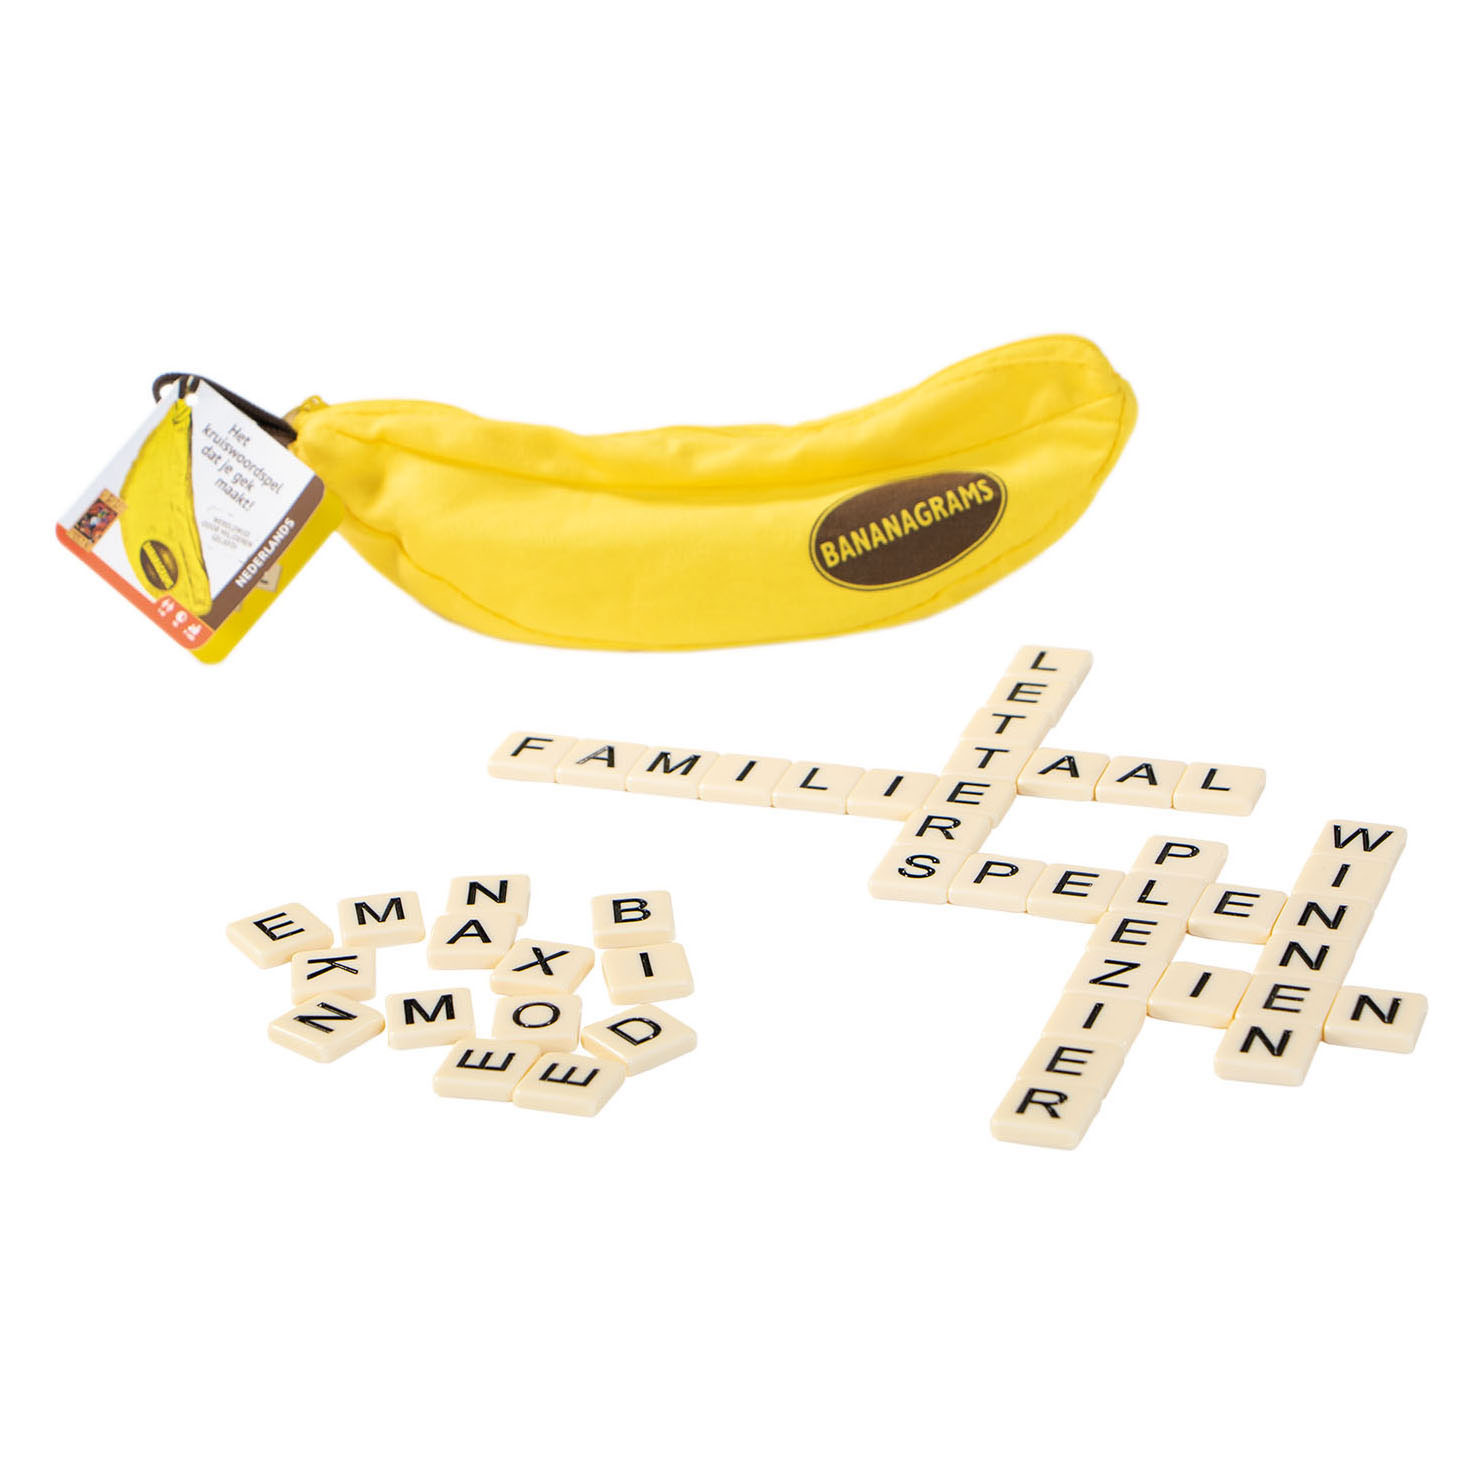 Bananagram Kruiswoordspel